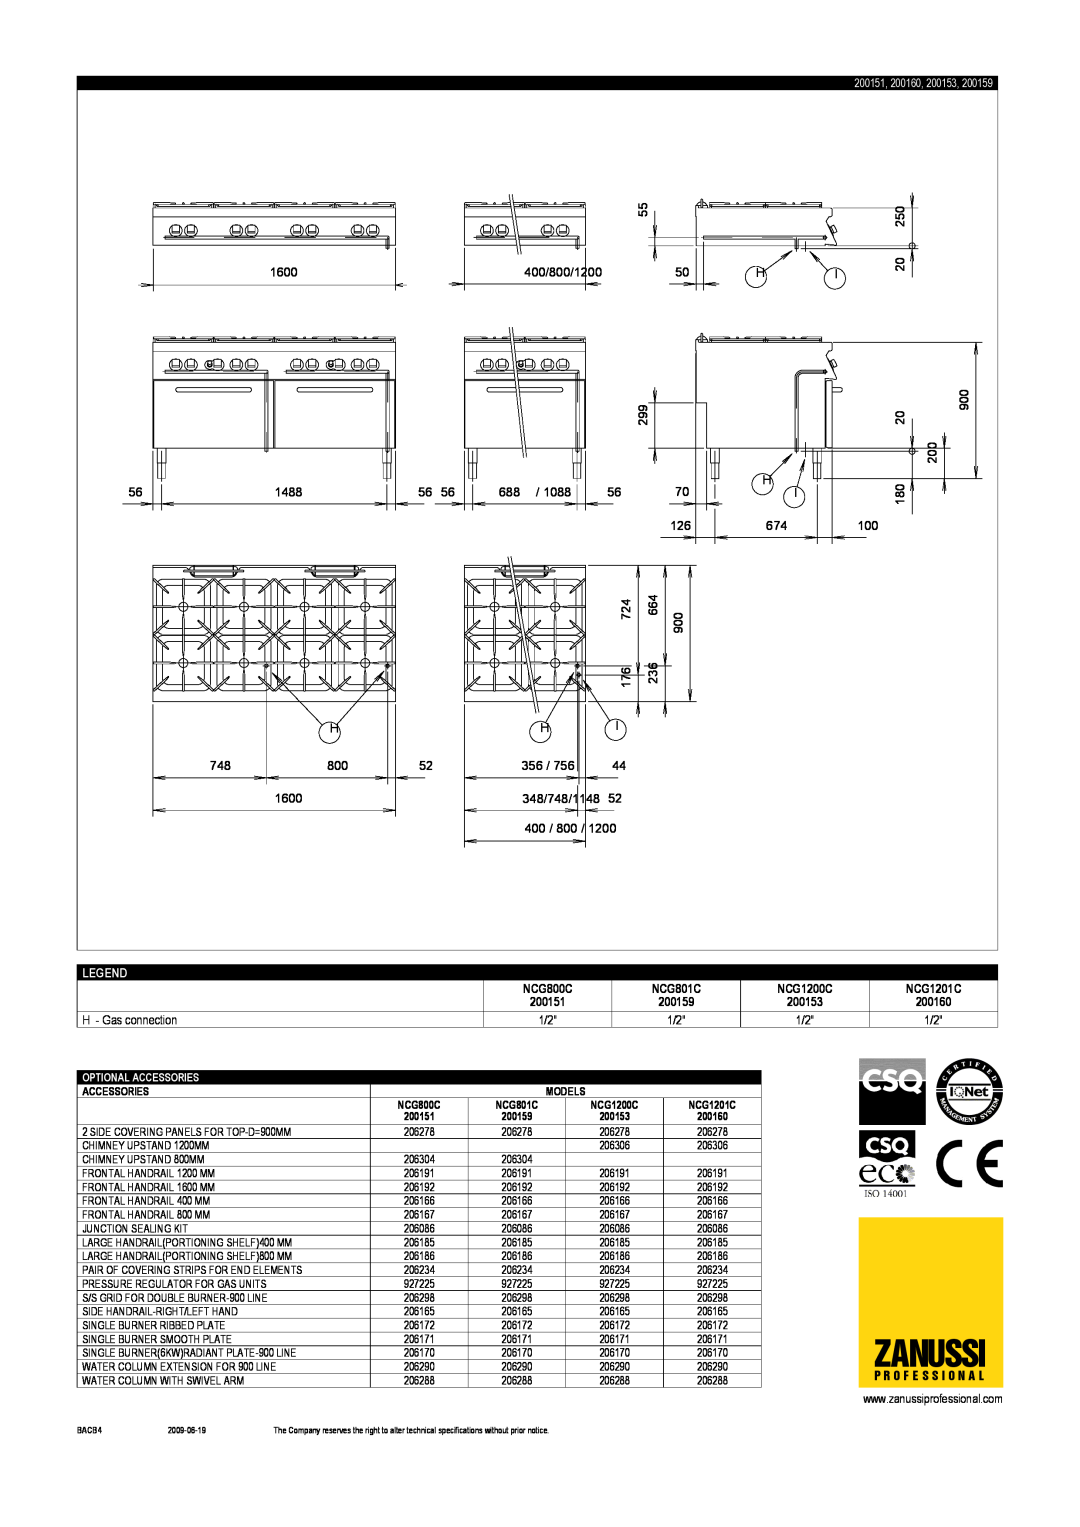 Zanussi NCG1201C, NCG801C, NCG800C, NCG1200C, 200160, 200153, 200159, 200151 dimensions Zanussi, H - Gas connection 